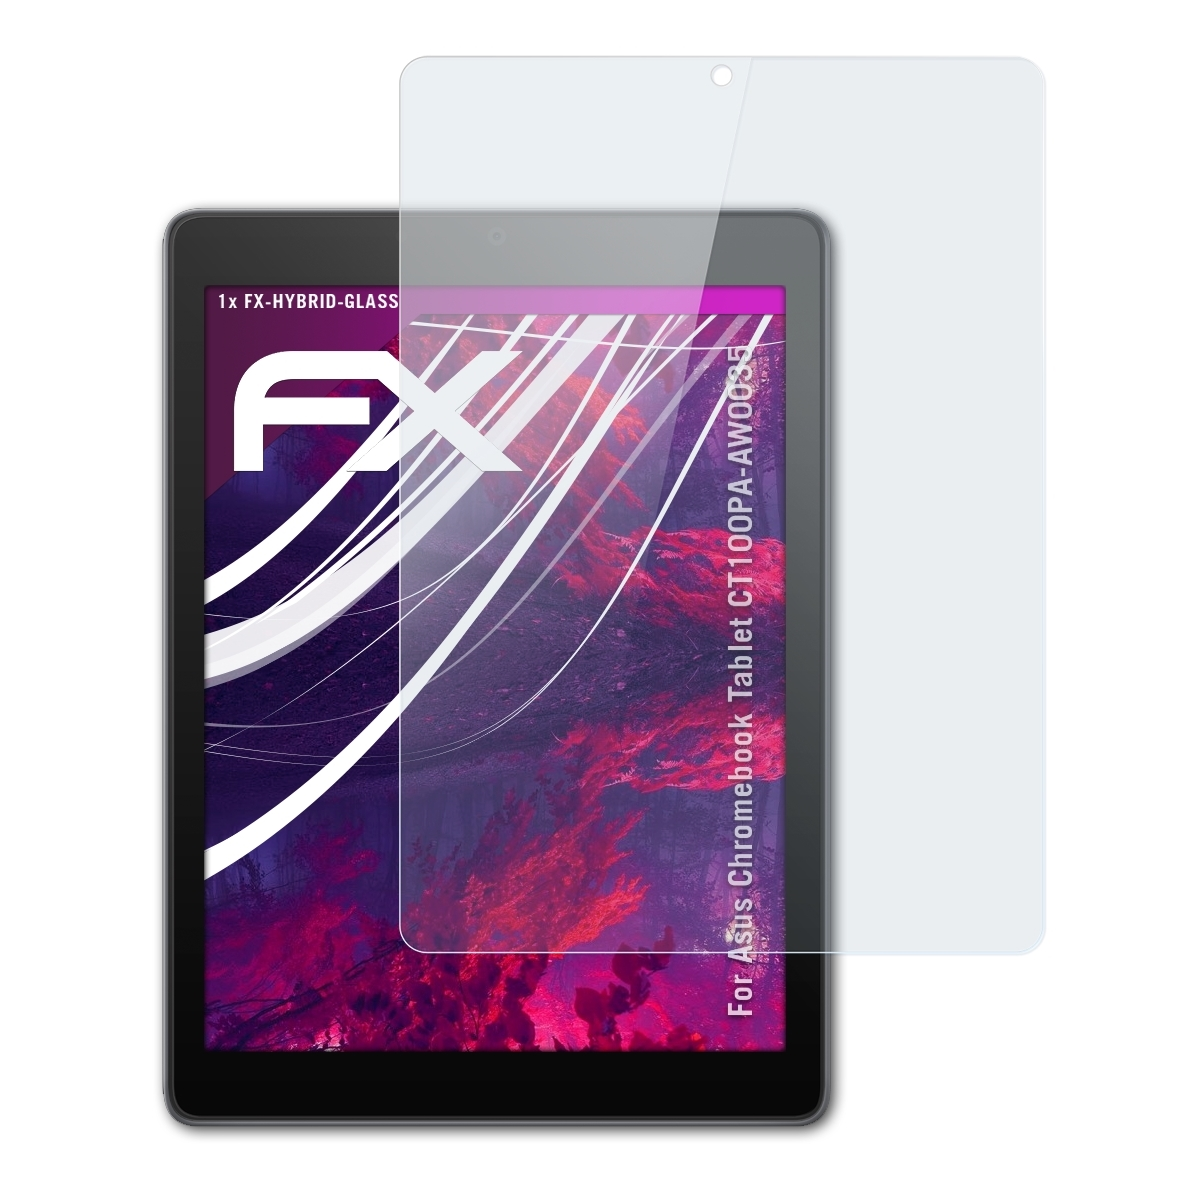 ATFOLIX FX-Hybrid-Glass Schutzglas(für Asus Tablet Chromebook (CT100PA-AW0035))